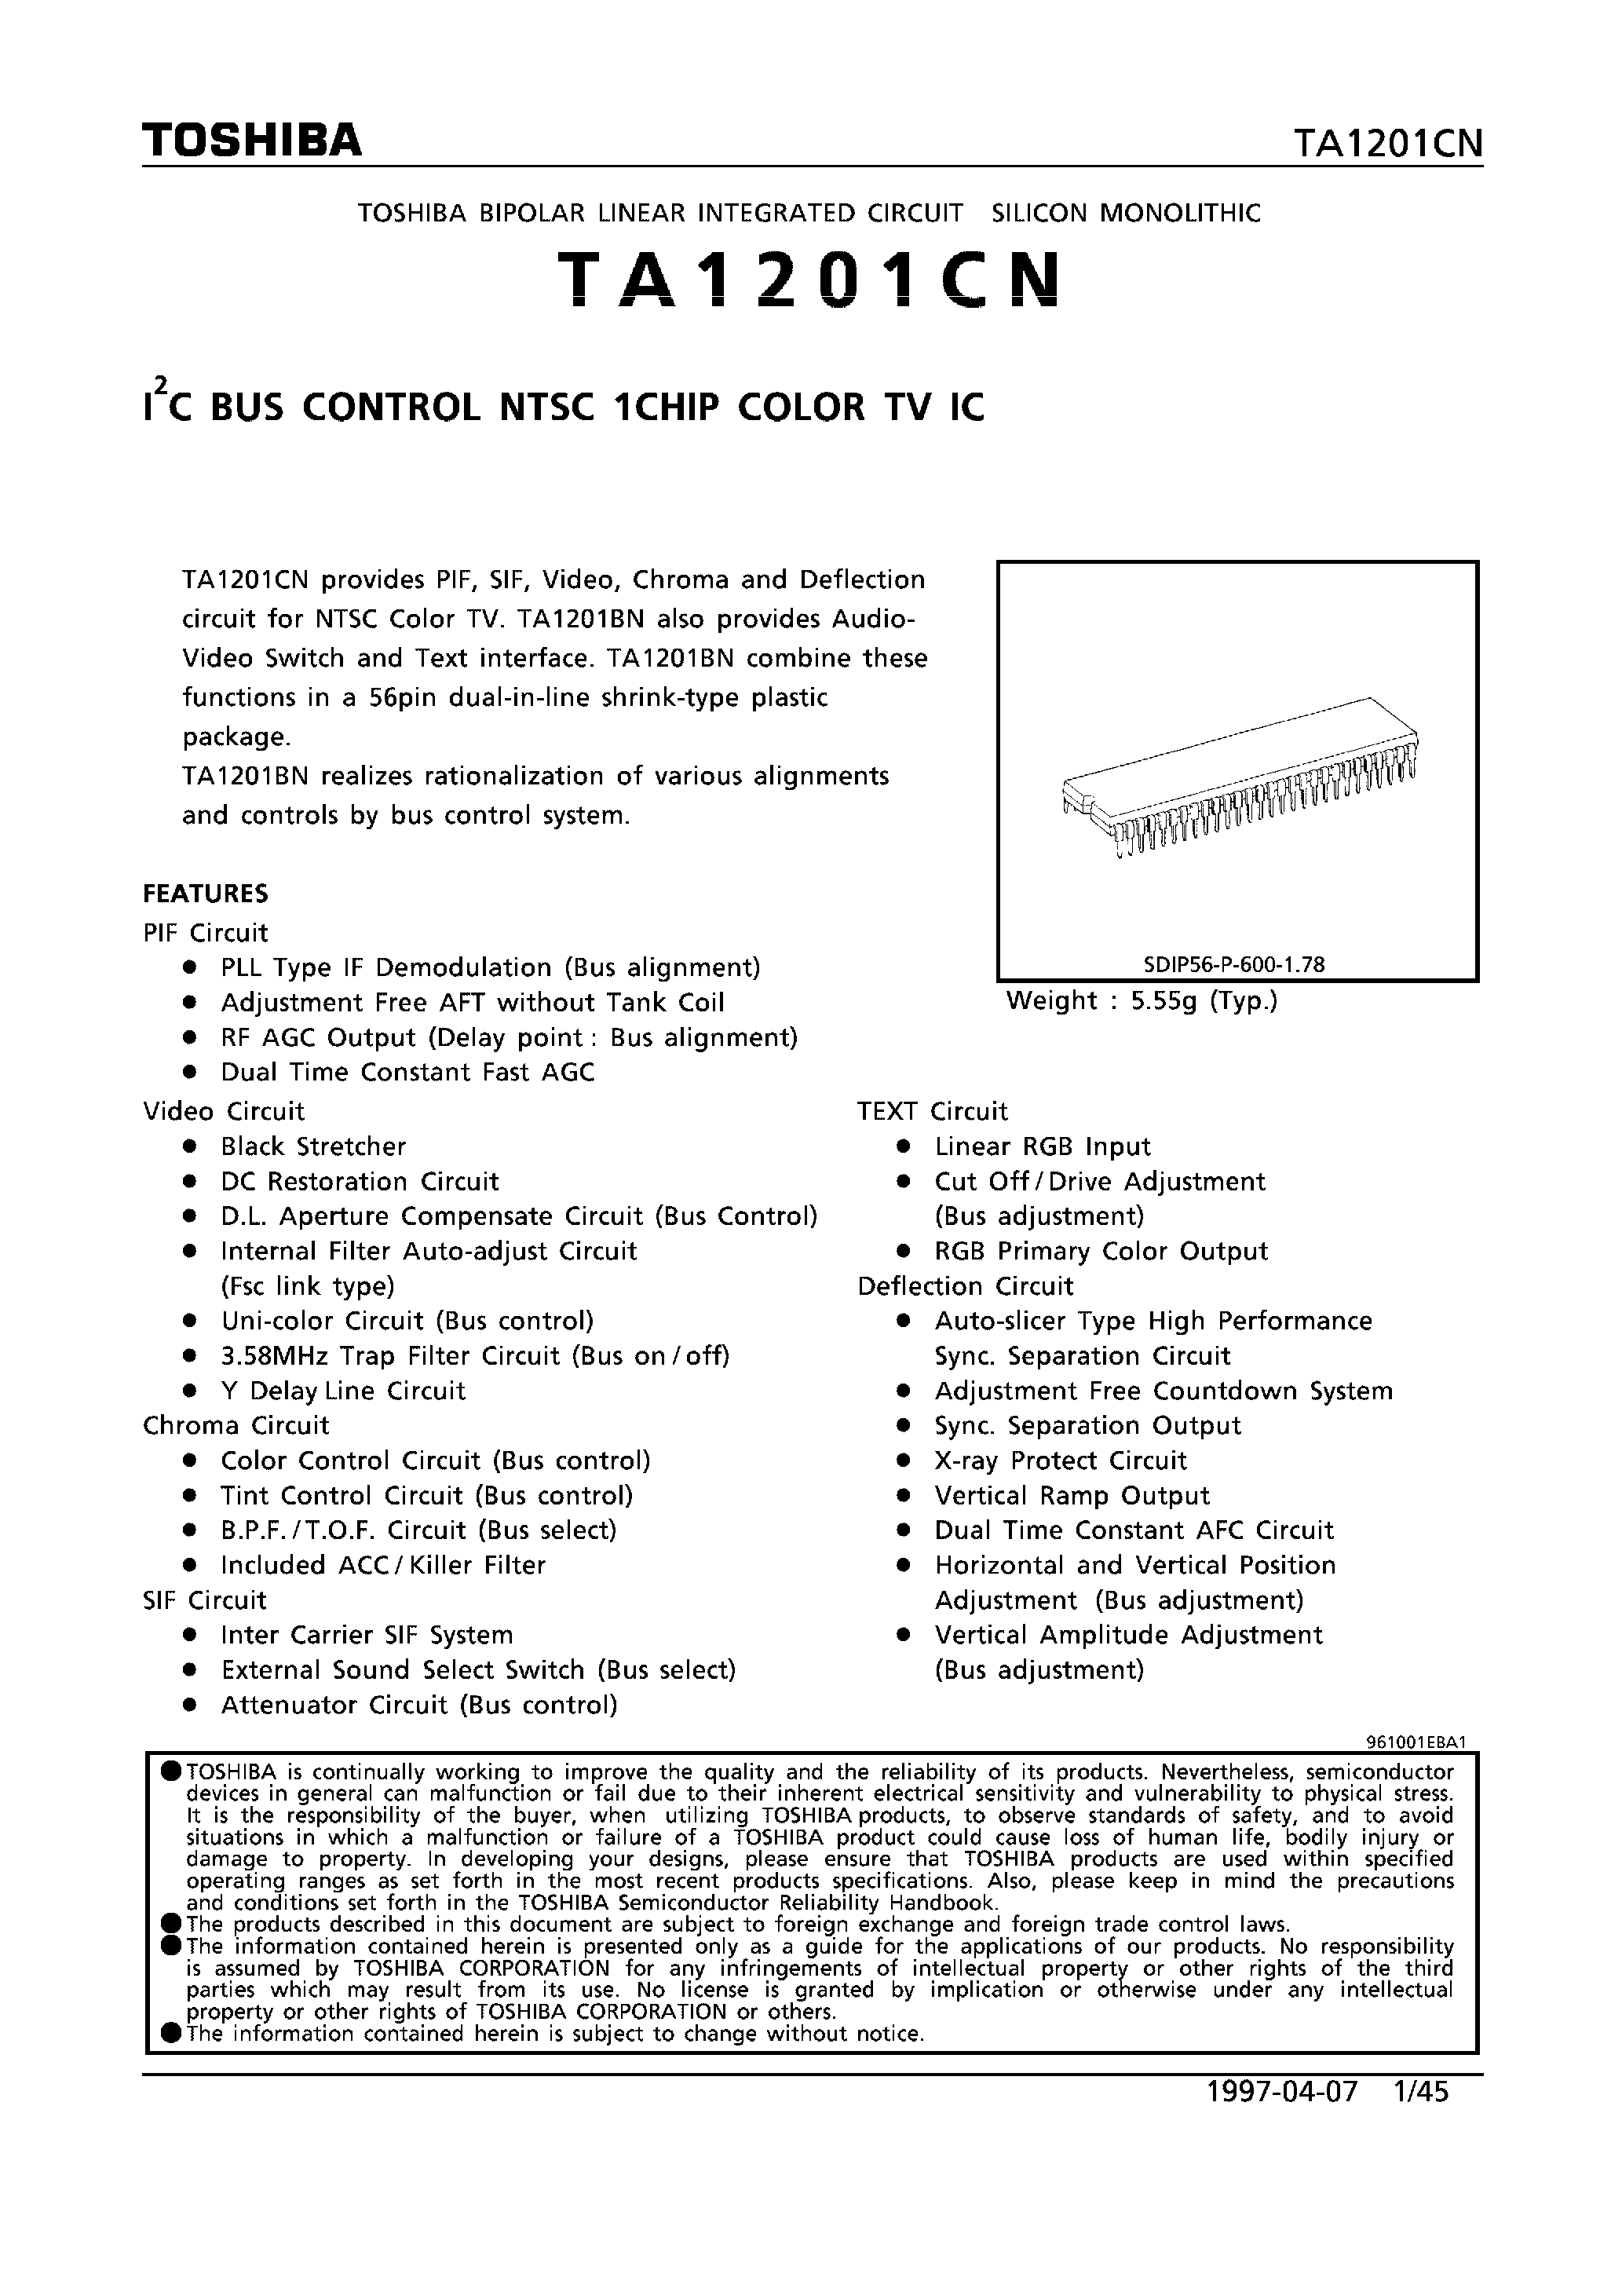 Datasheet TA1201CN - I2C BUS CONTROL NTSC 1CHIP COLOR TV IC page 1